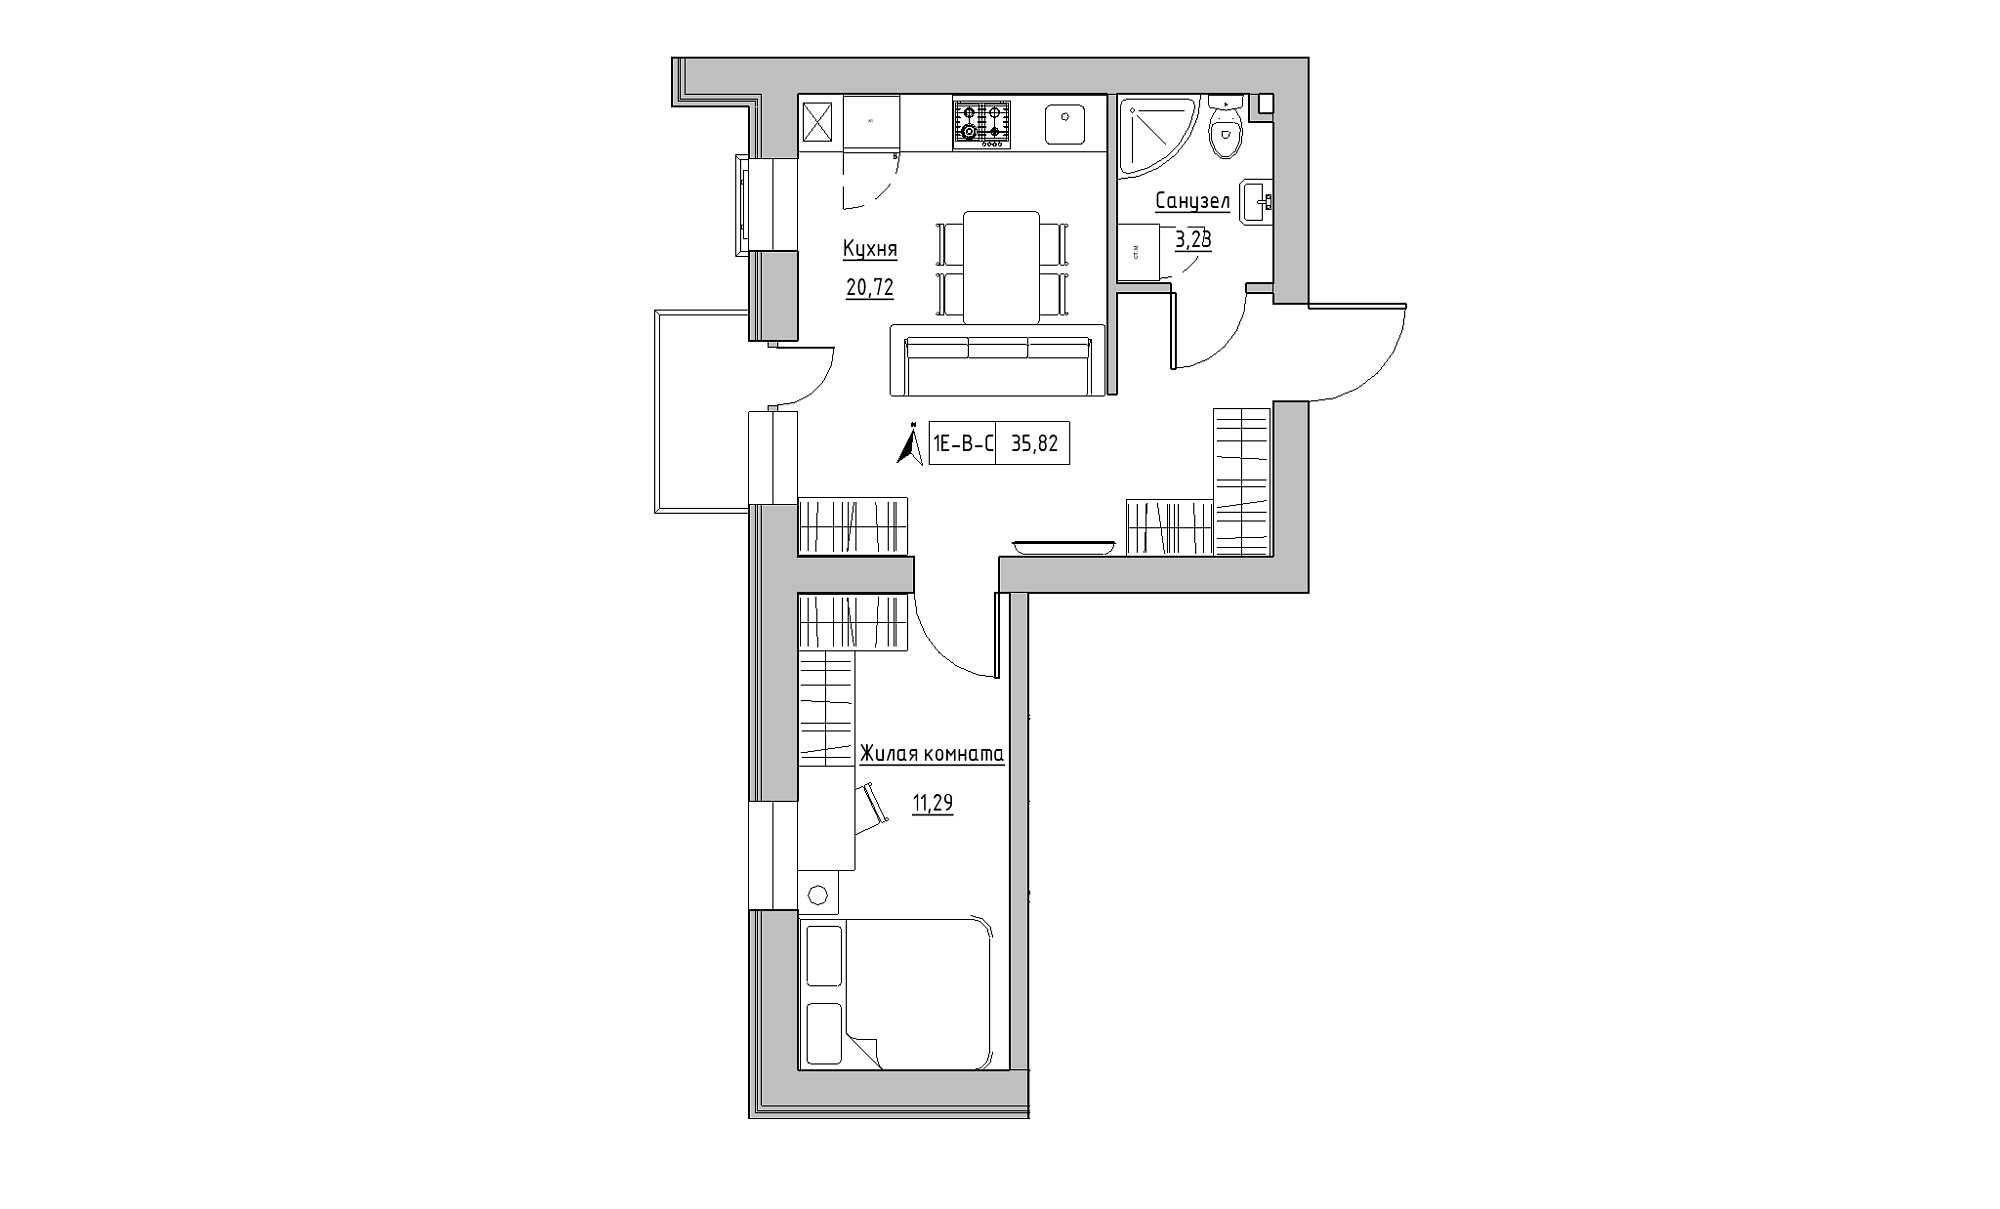 Planning 1-rm flats area 35.82m2, KS-016-02/0009.